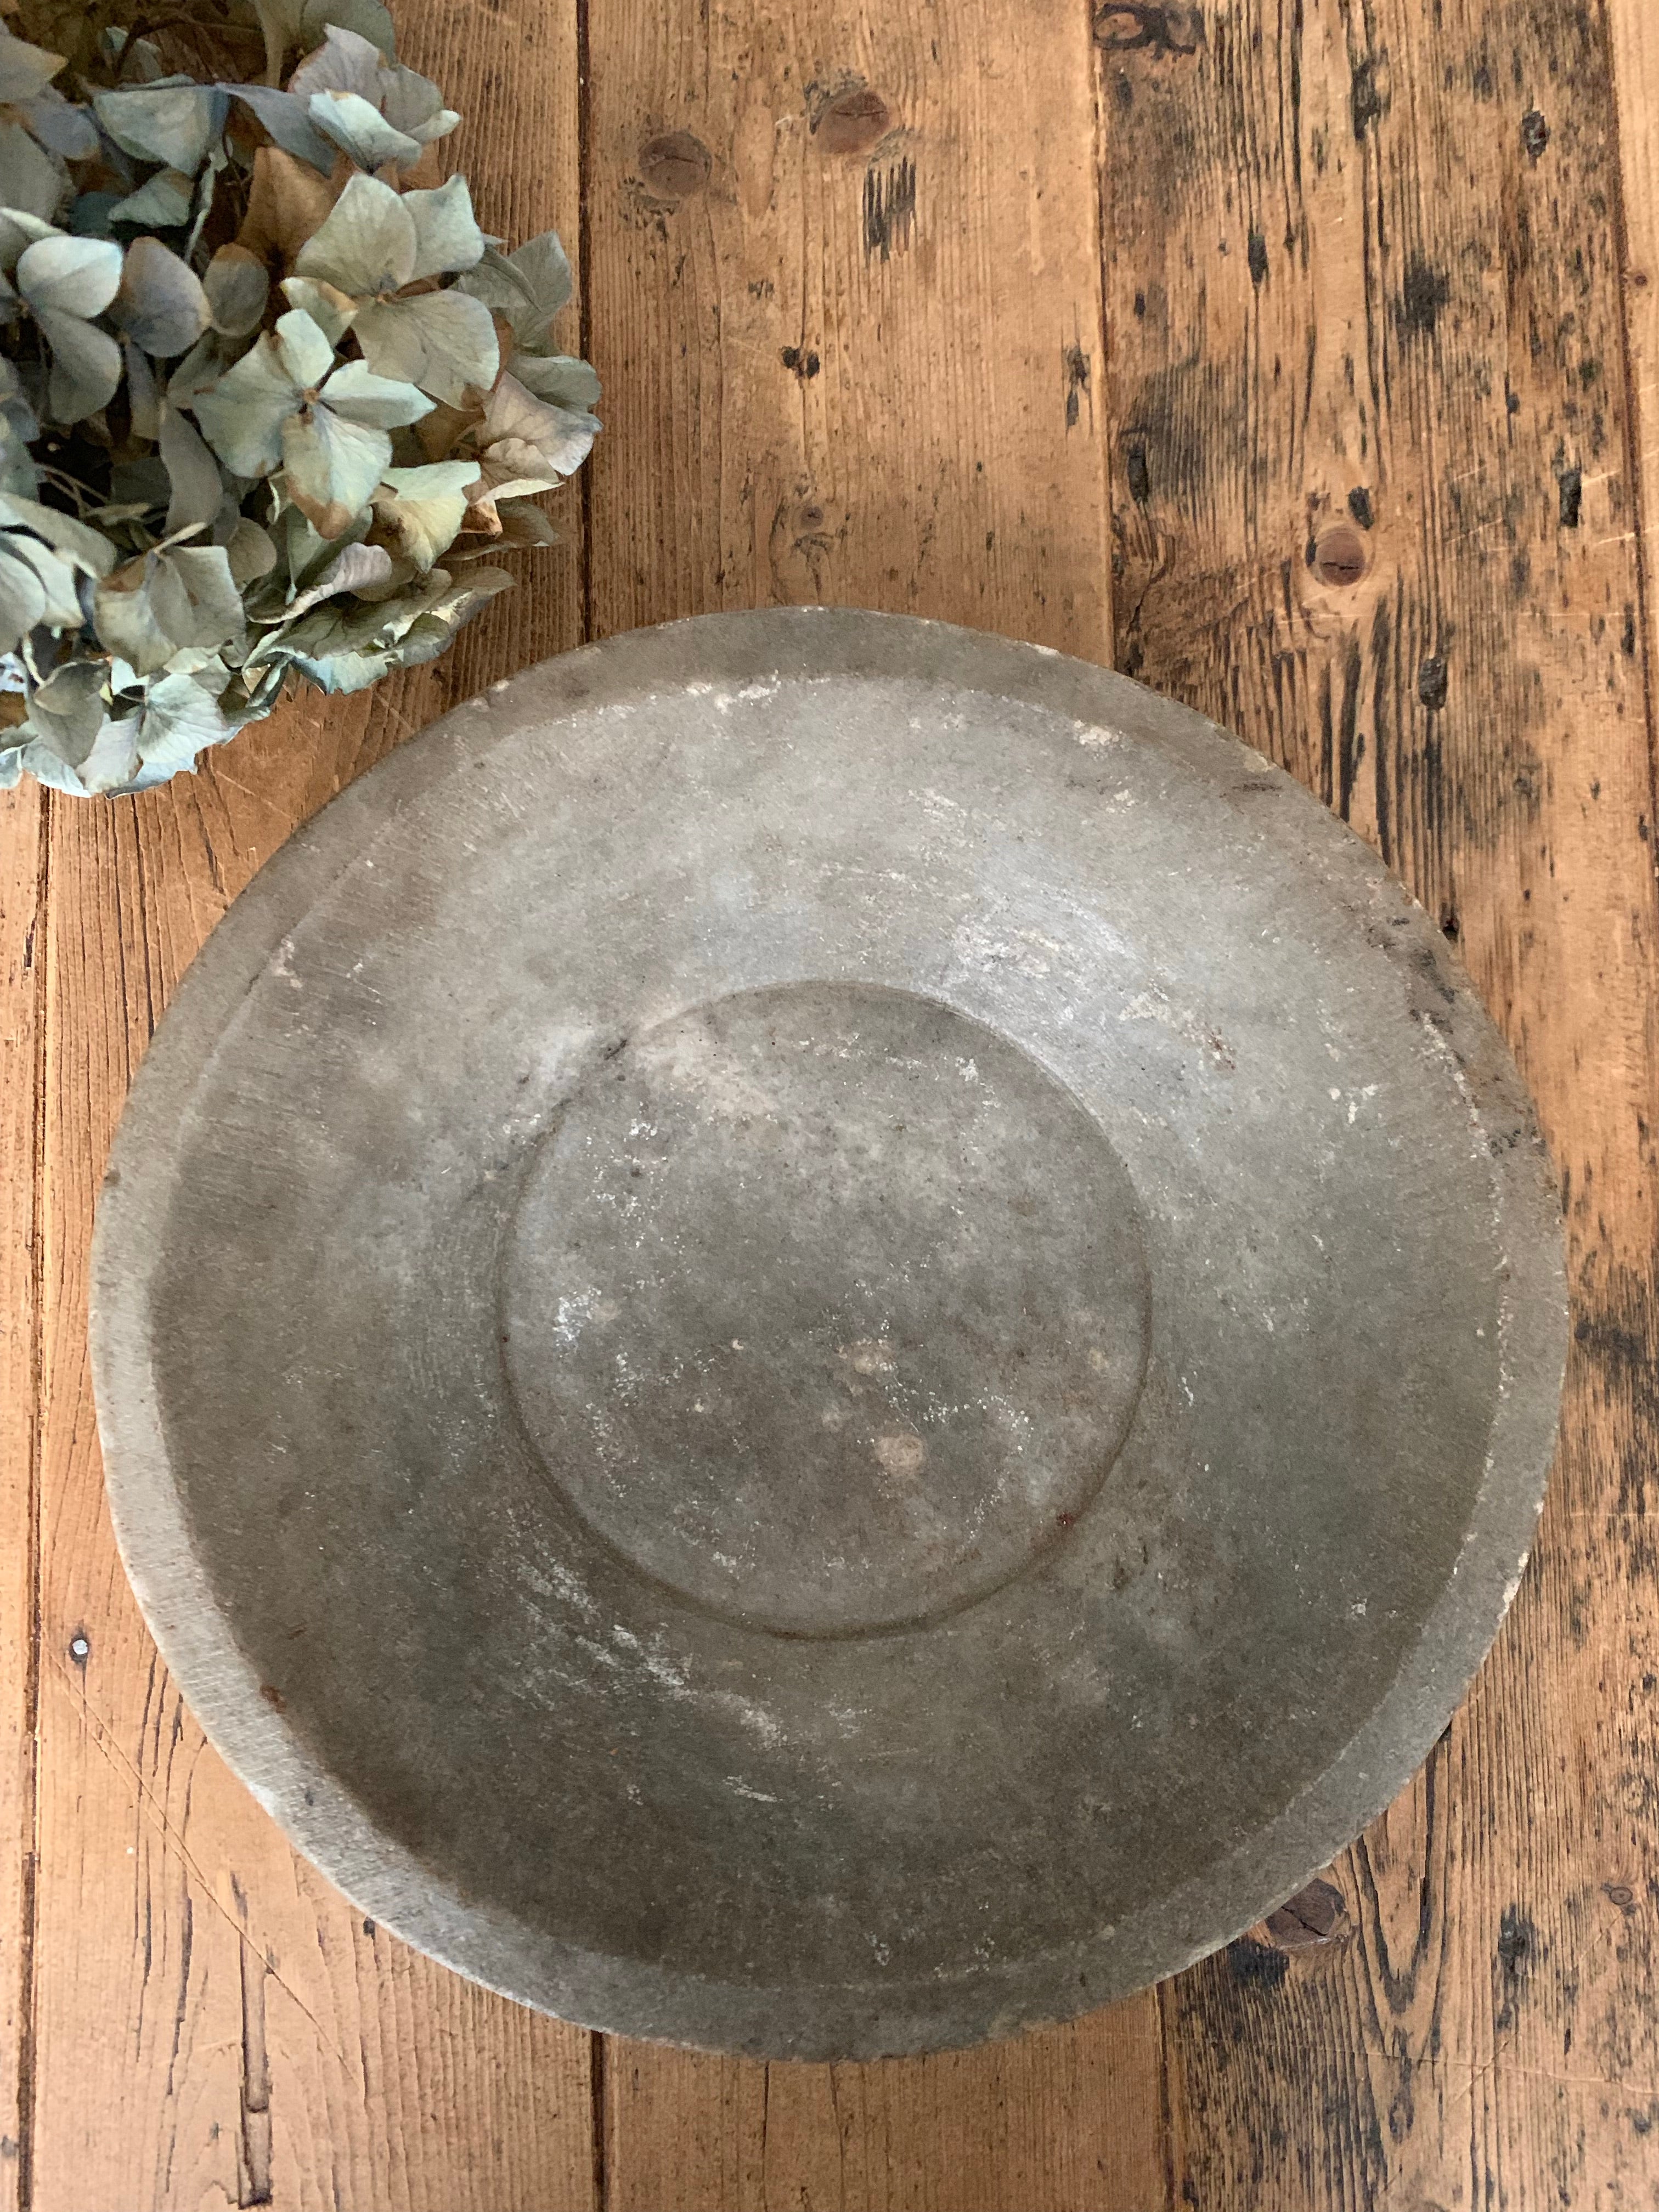 Antique Marble Stone Bowl 1